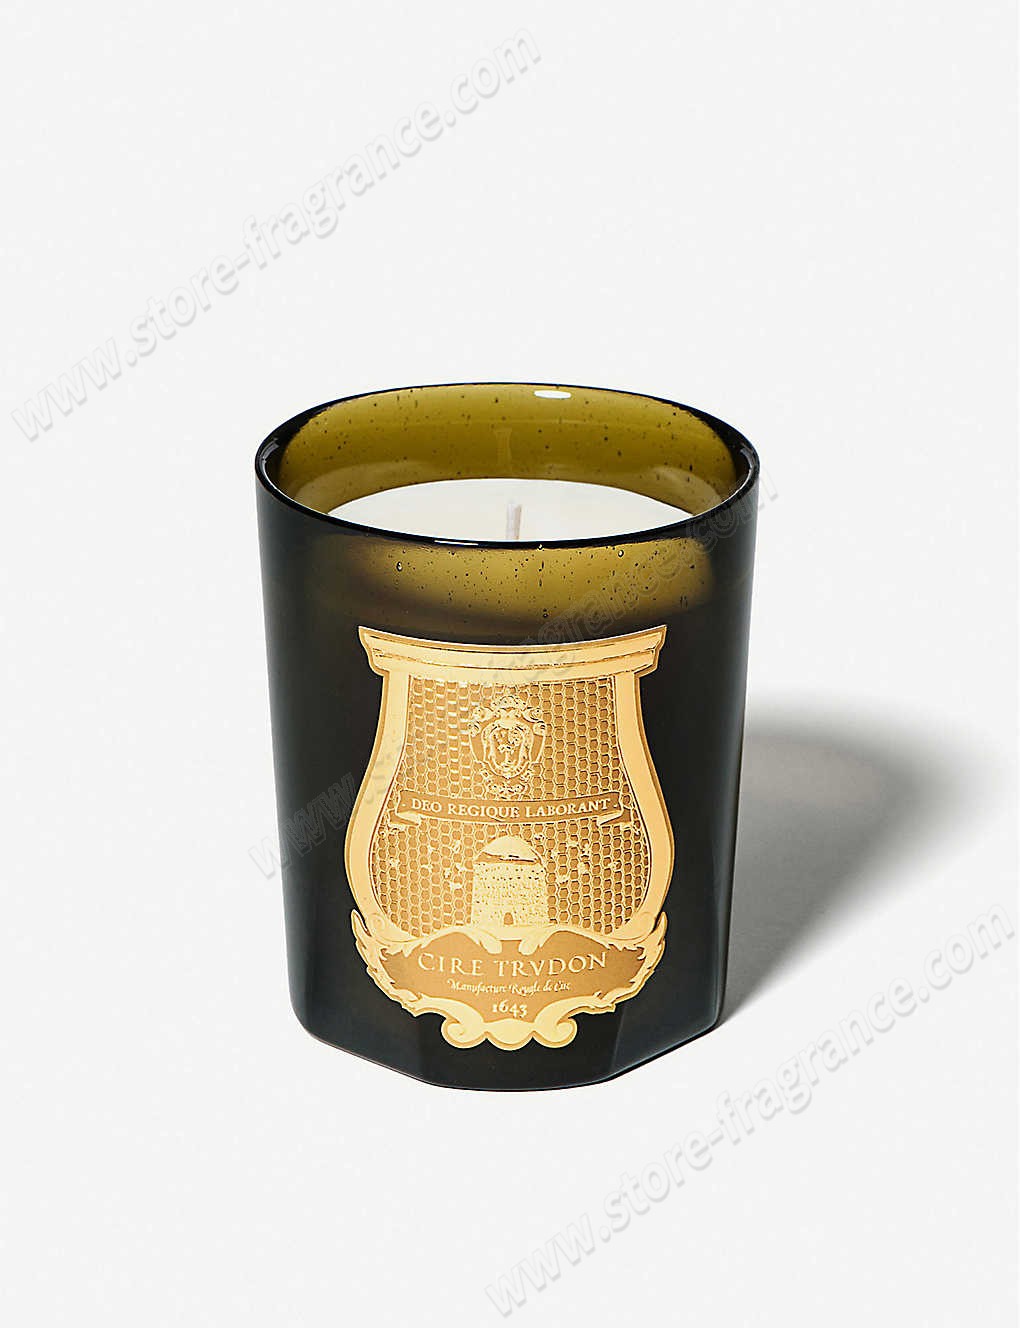 CIRE TRUDON/Odalisque scented candle 270g ✿ Discount Store - CIRE TRUDON/Odalisque scented candle 270g ✿ Discount Store